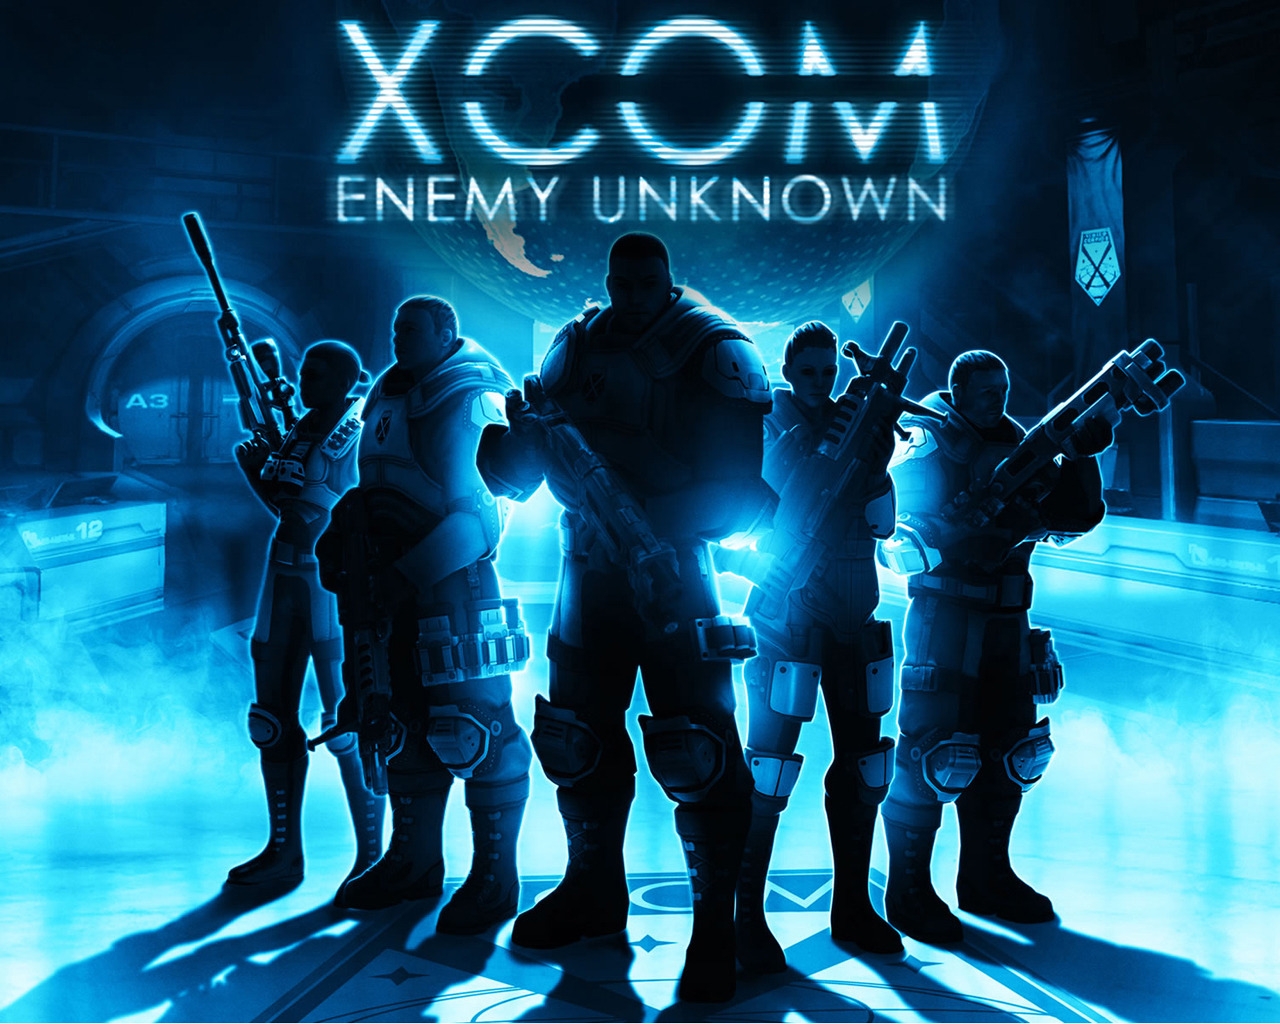 XCOM Enemy Unknown for 1280 x 1024 resolution